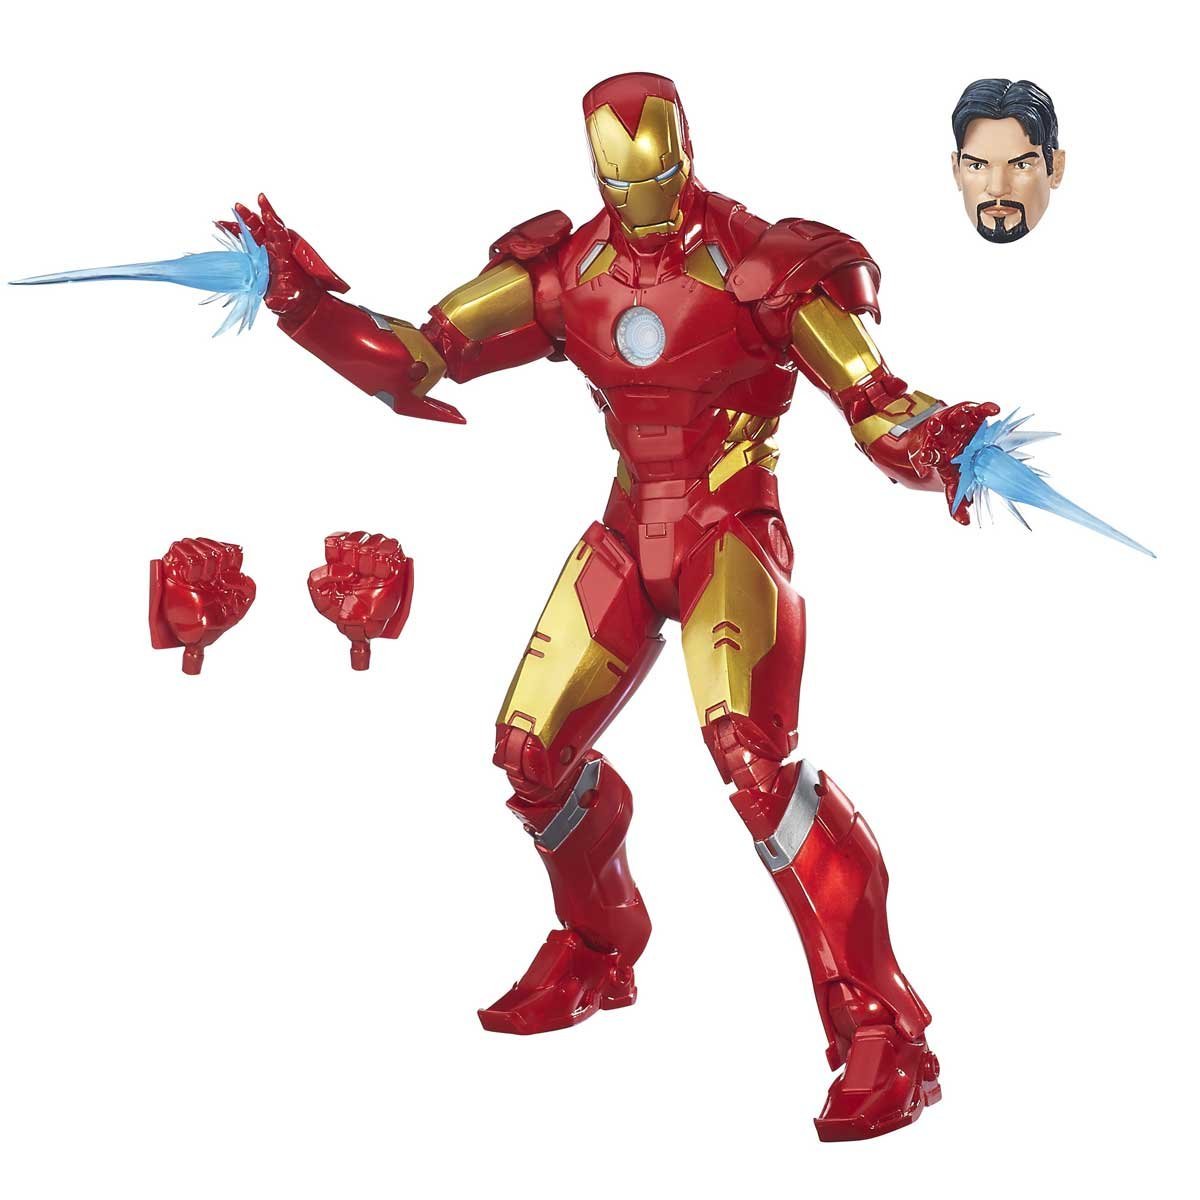 Ca Legends 12 - Iron Man Hasbro